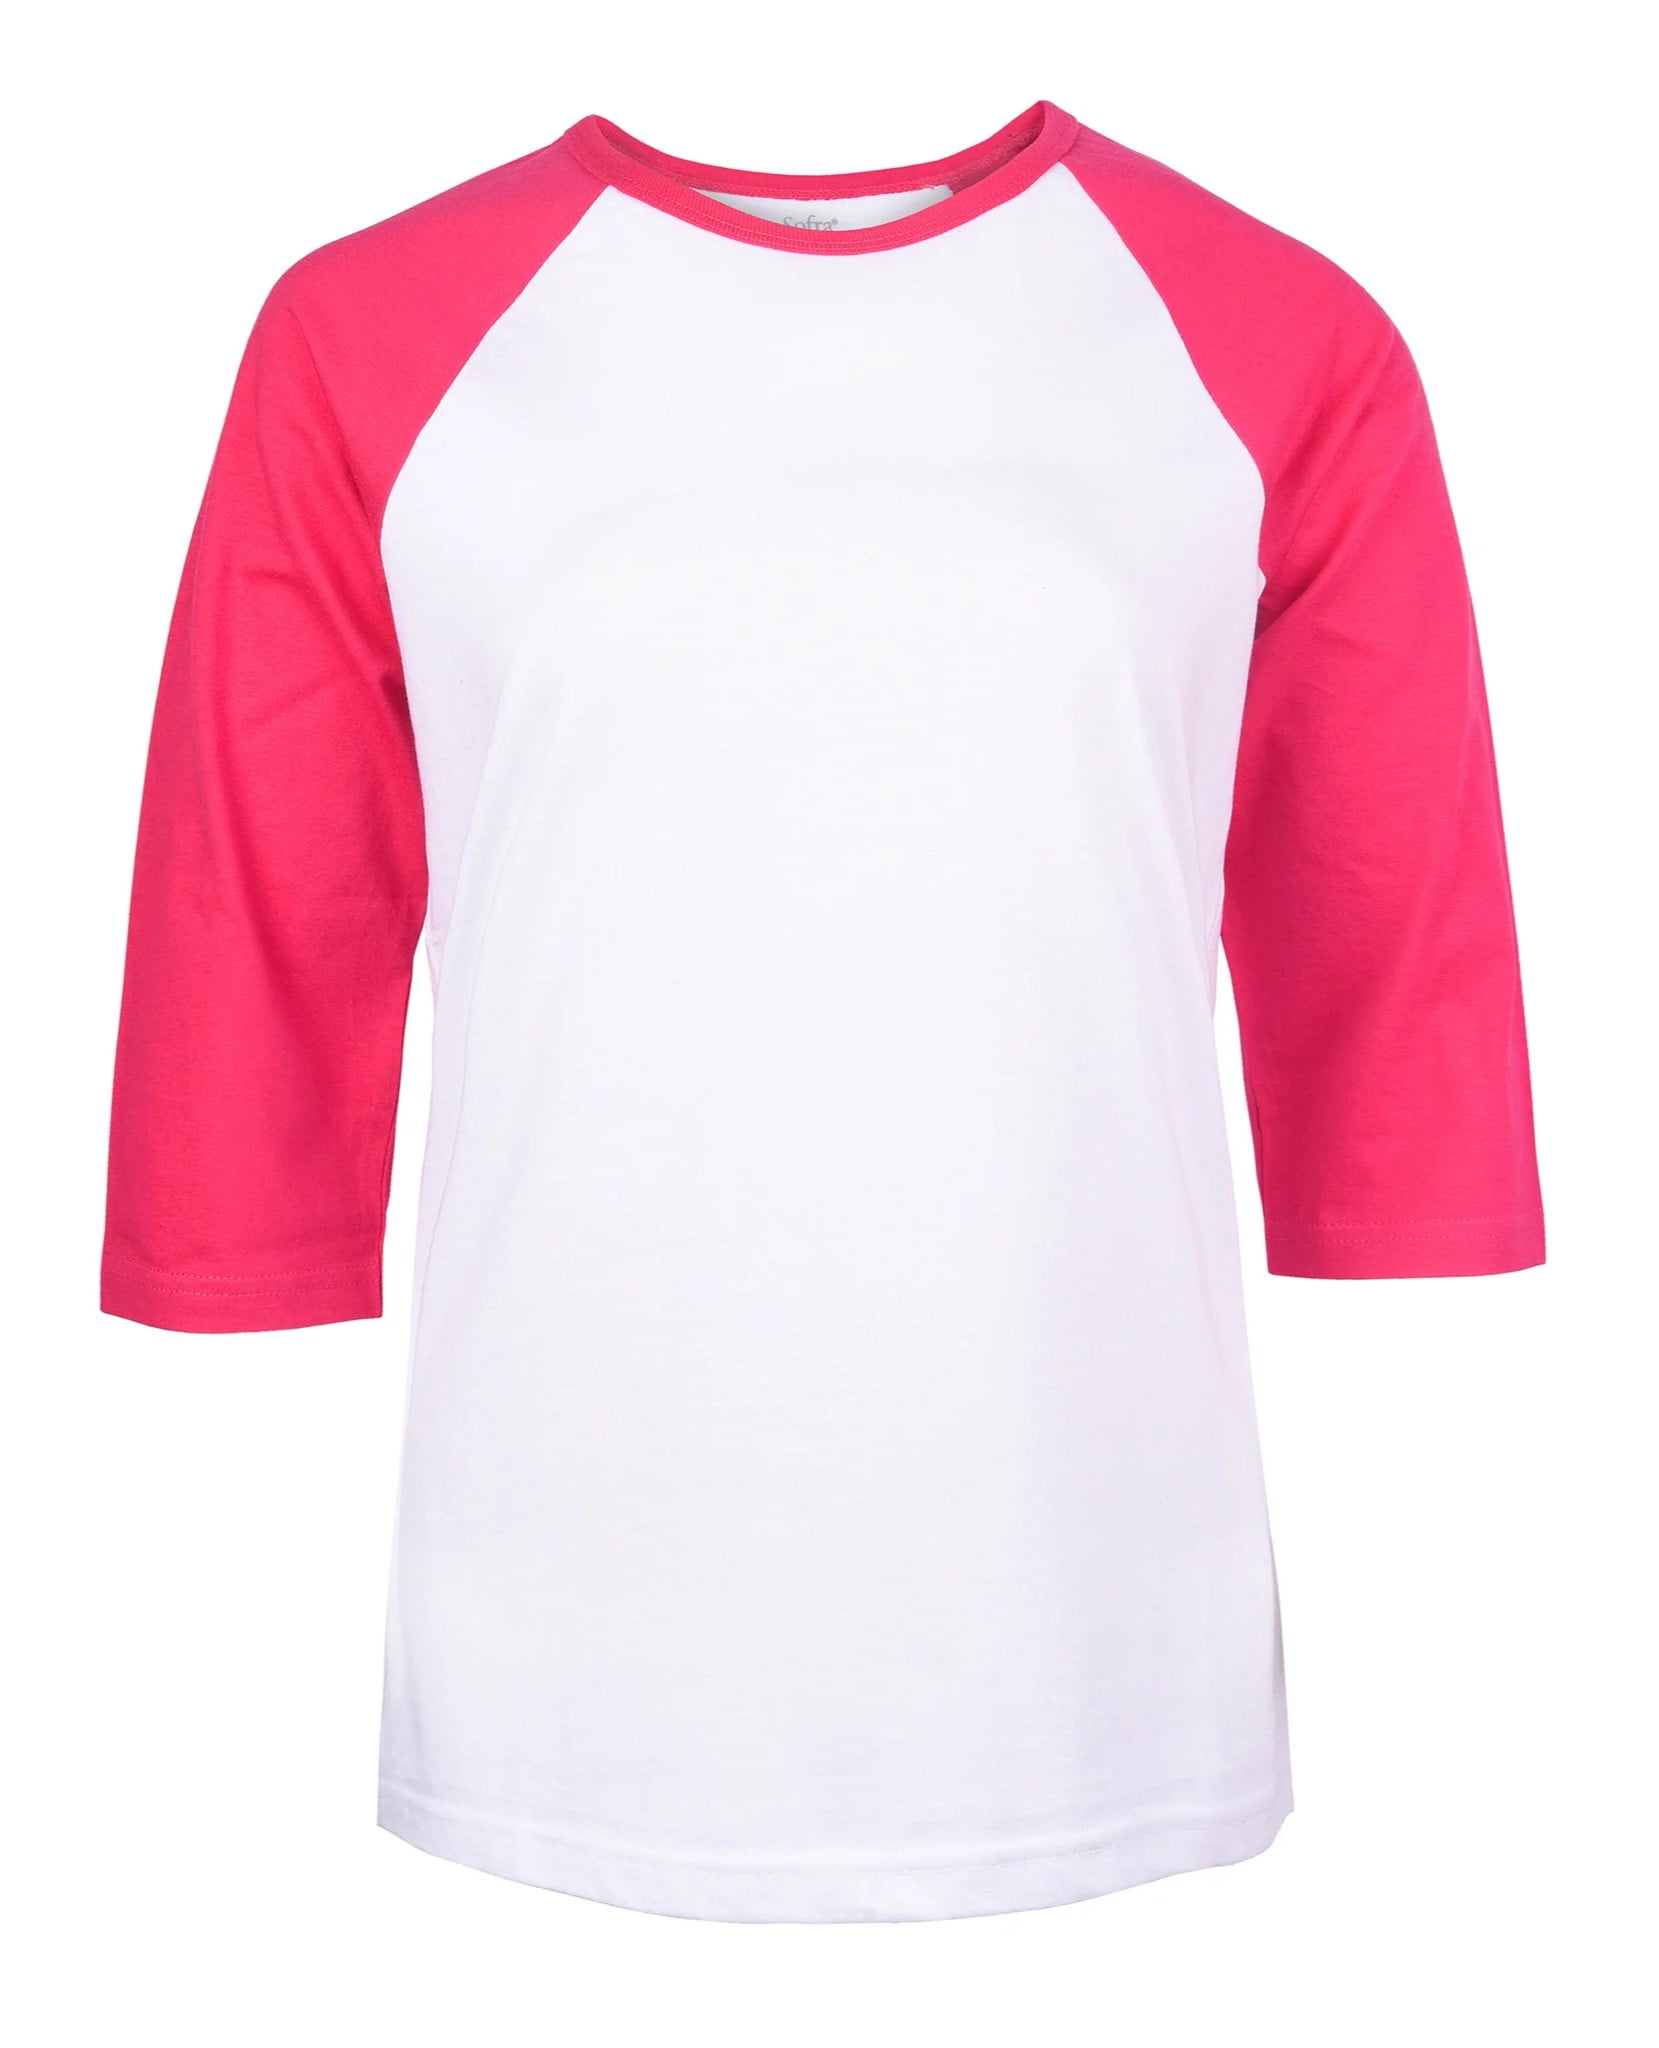 47 Brand Women's St. Louis Cardinals Triple Crown Raglan T-Shirt - Macy's